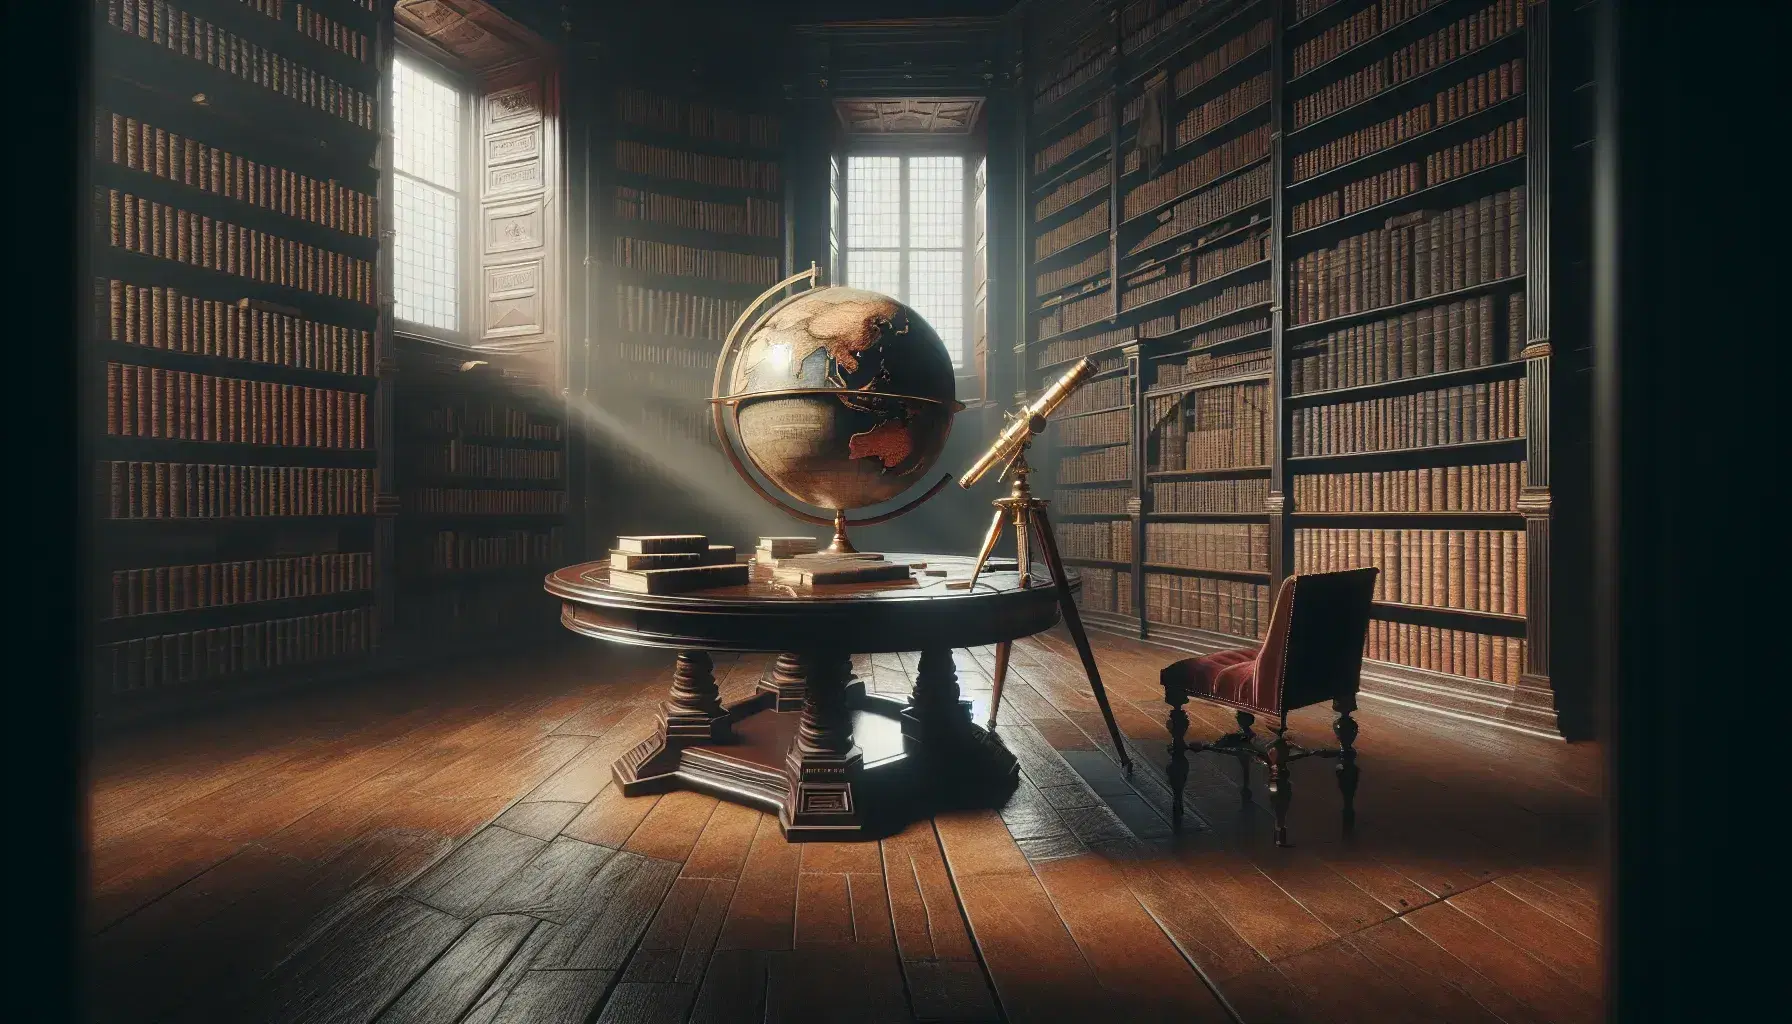 Biblioteca antigua con estanterías de madera oscura llenas de libros, mesa central con globo terráqueo antiguo y telescopio de latón, silla con tapizado rojo y suelo de madera iluminado por luz natural.